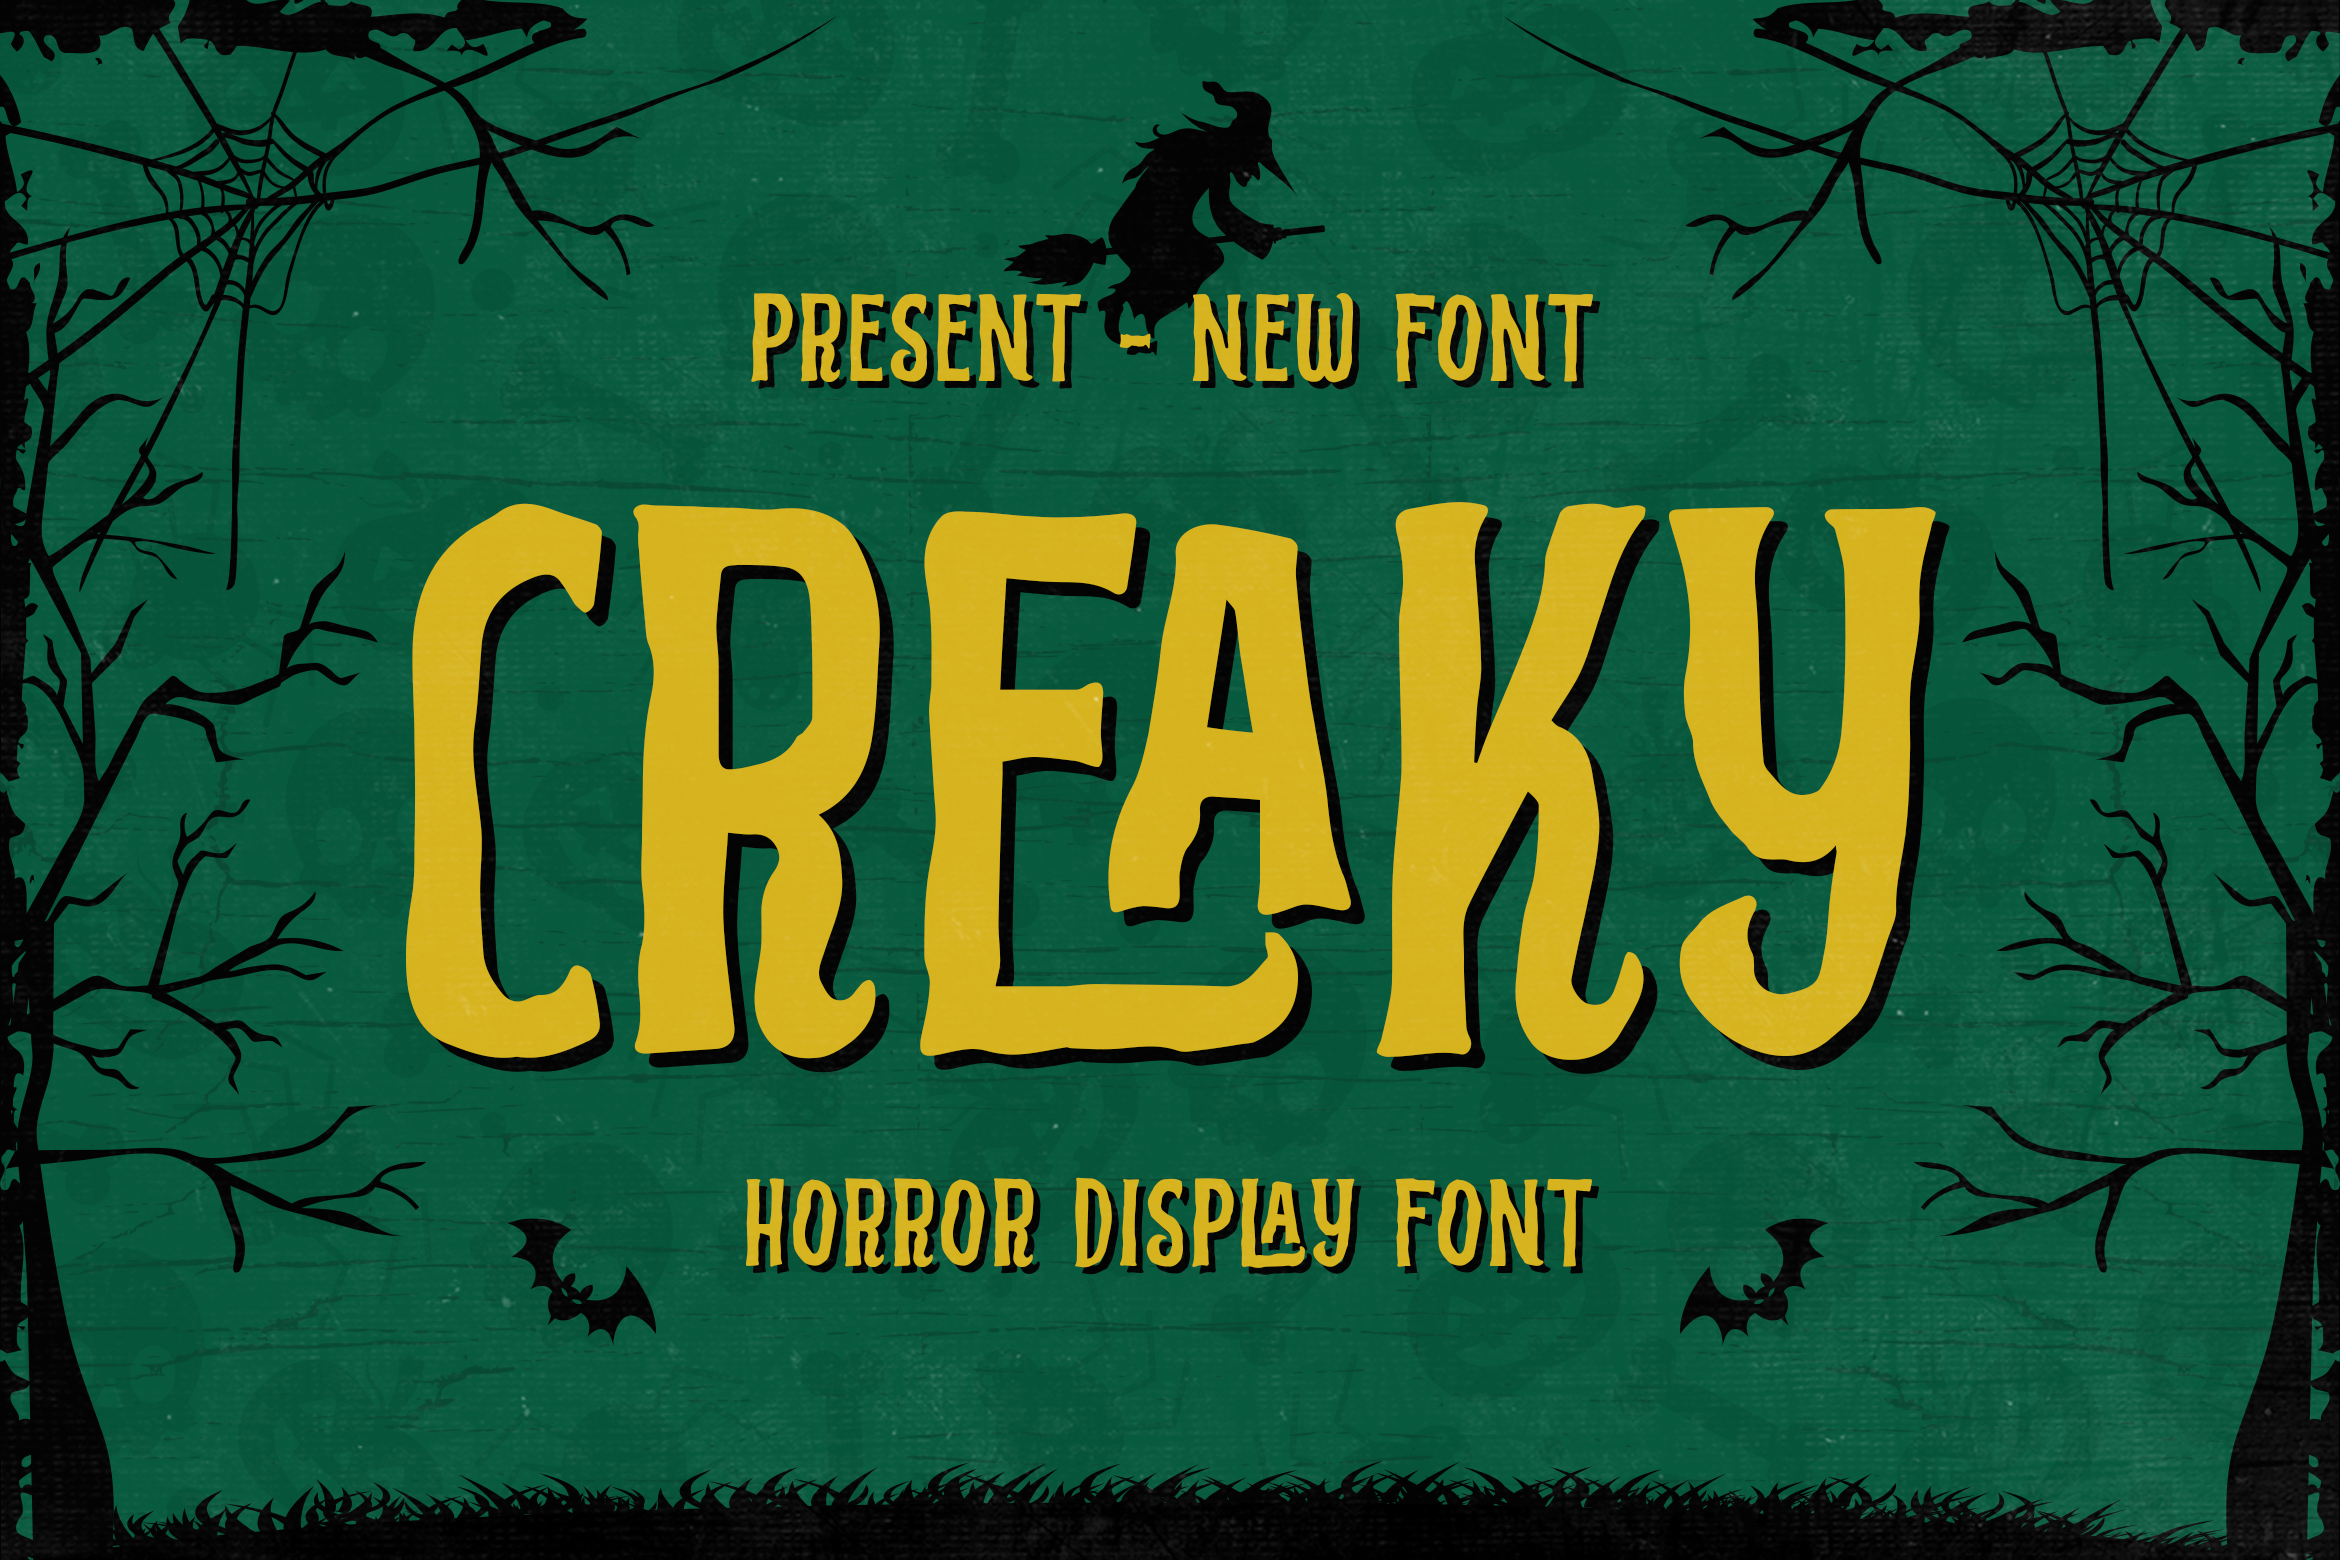 Creaky - Horror Display Font | Typefactory.co